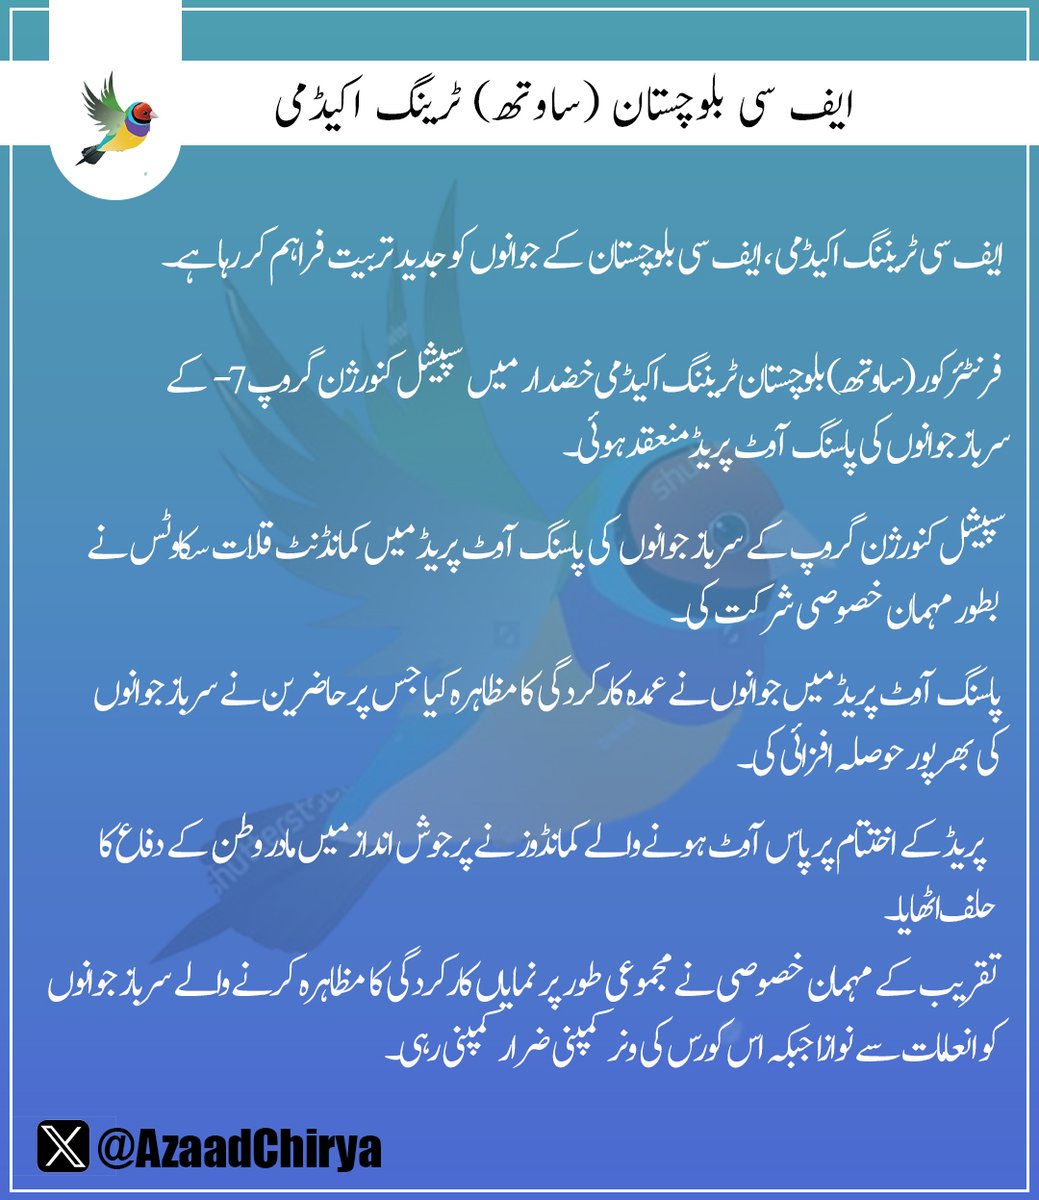 ایف سی بلوچستان (ساوتھ) ٹرینگ اکیڈمی #Balochistan #ARMY #fc #LatestNews